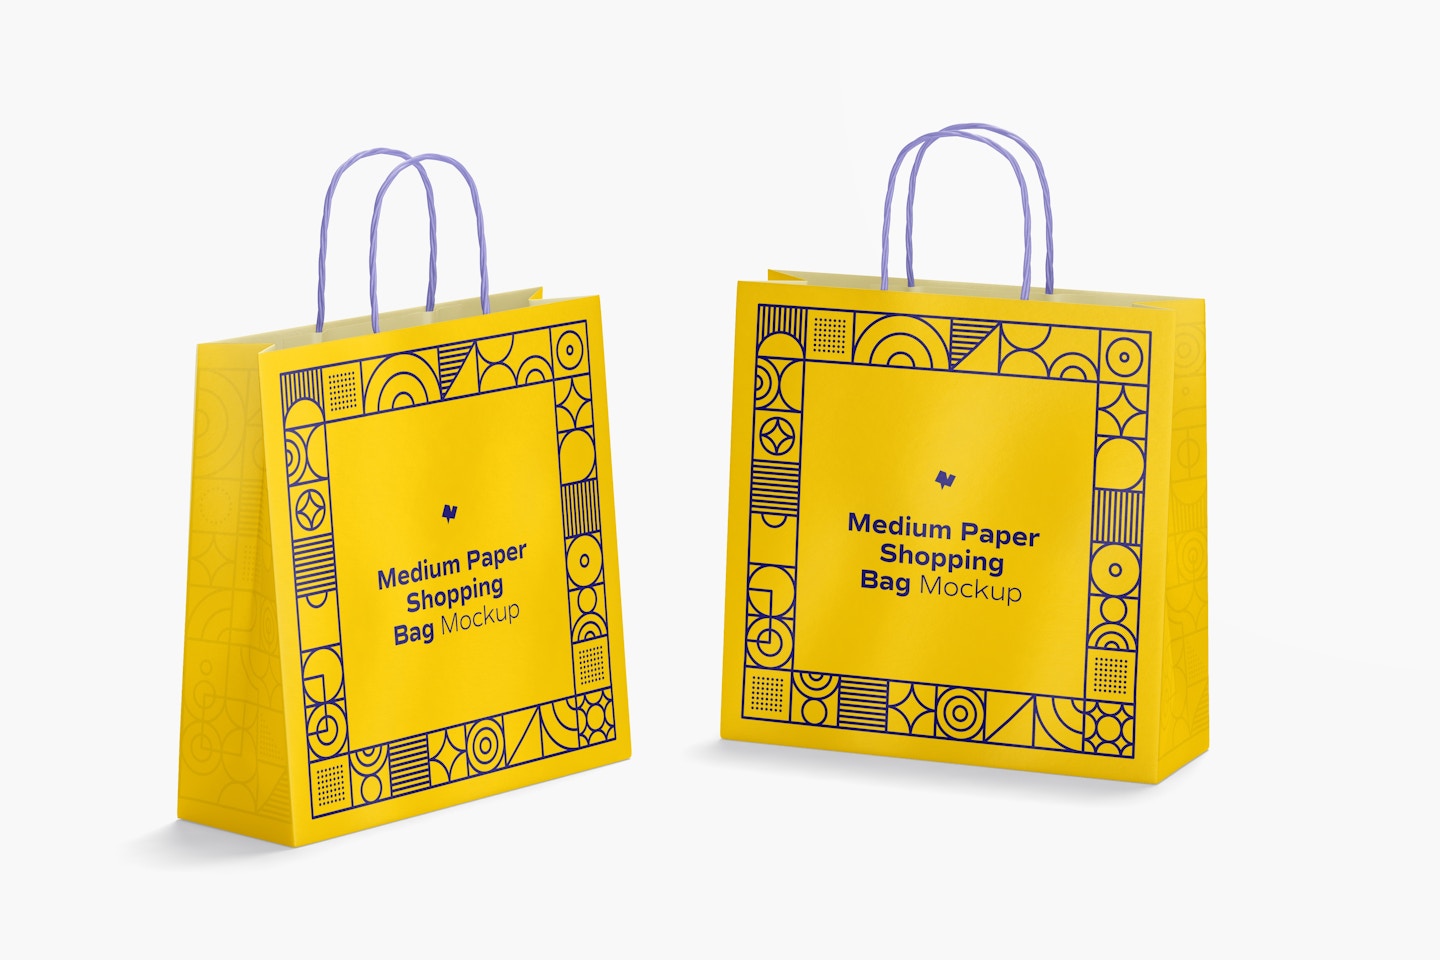 Medium Paper Shopping Bags Mockup, Perspective